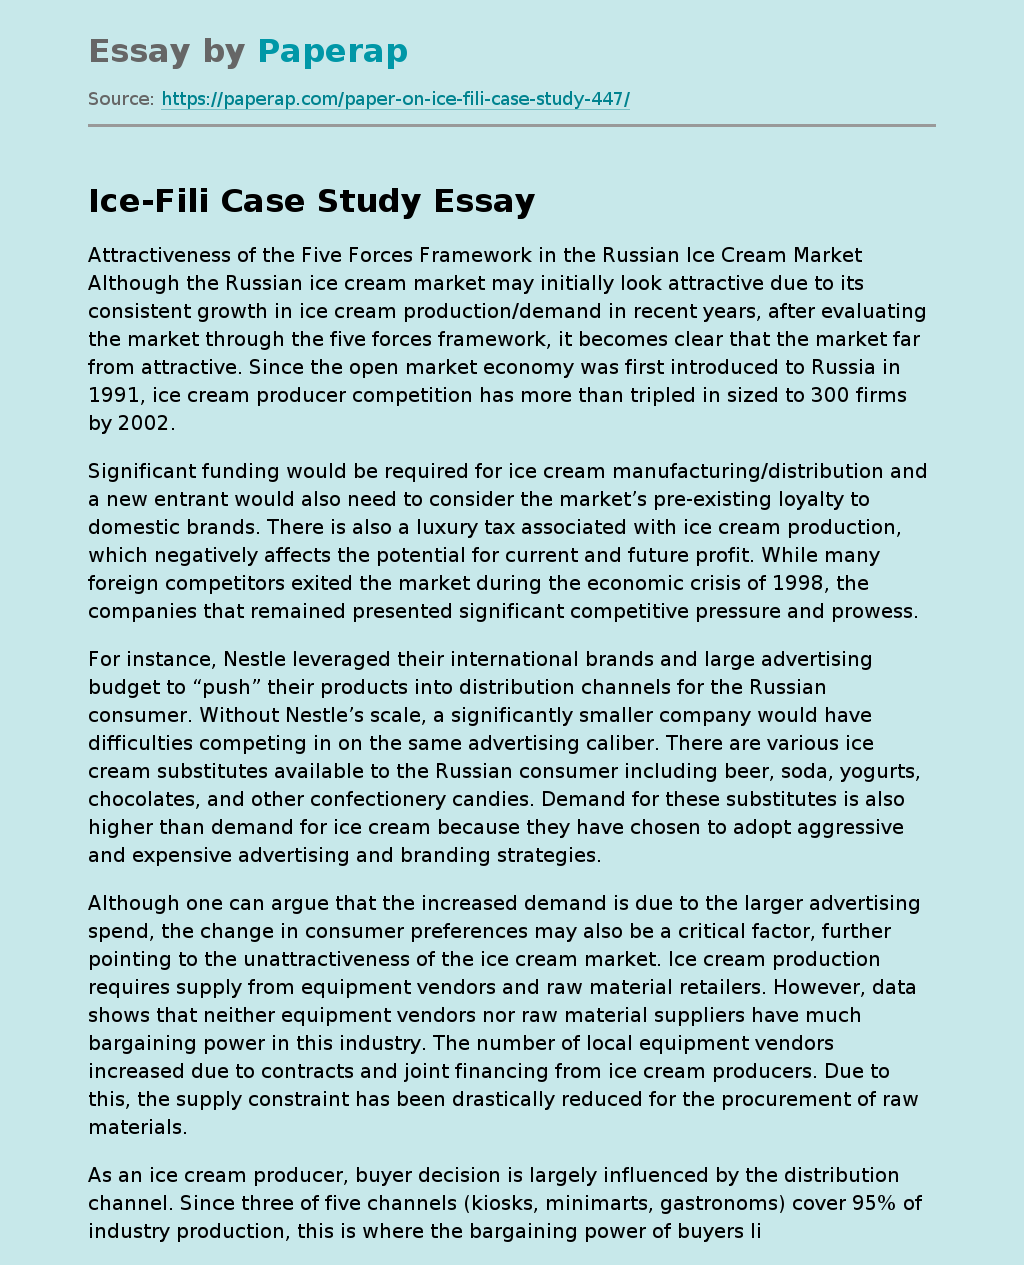 Ice-Fili Case Study